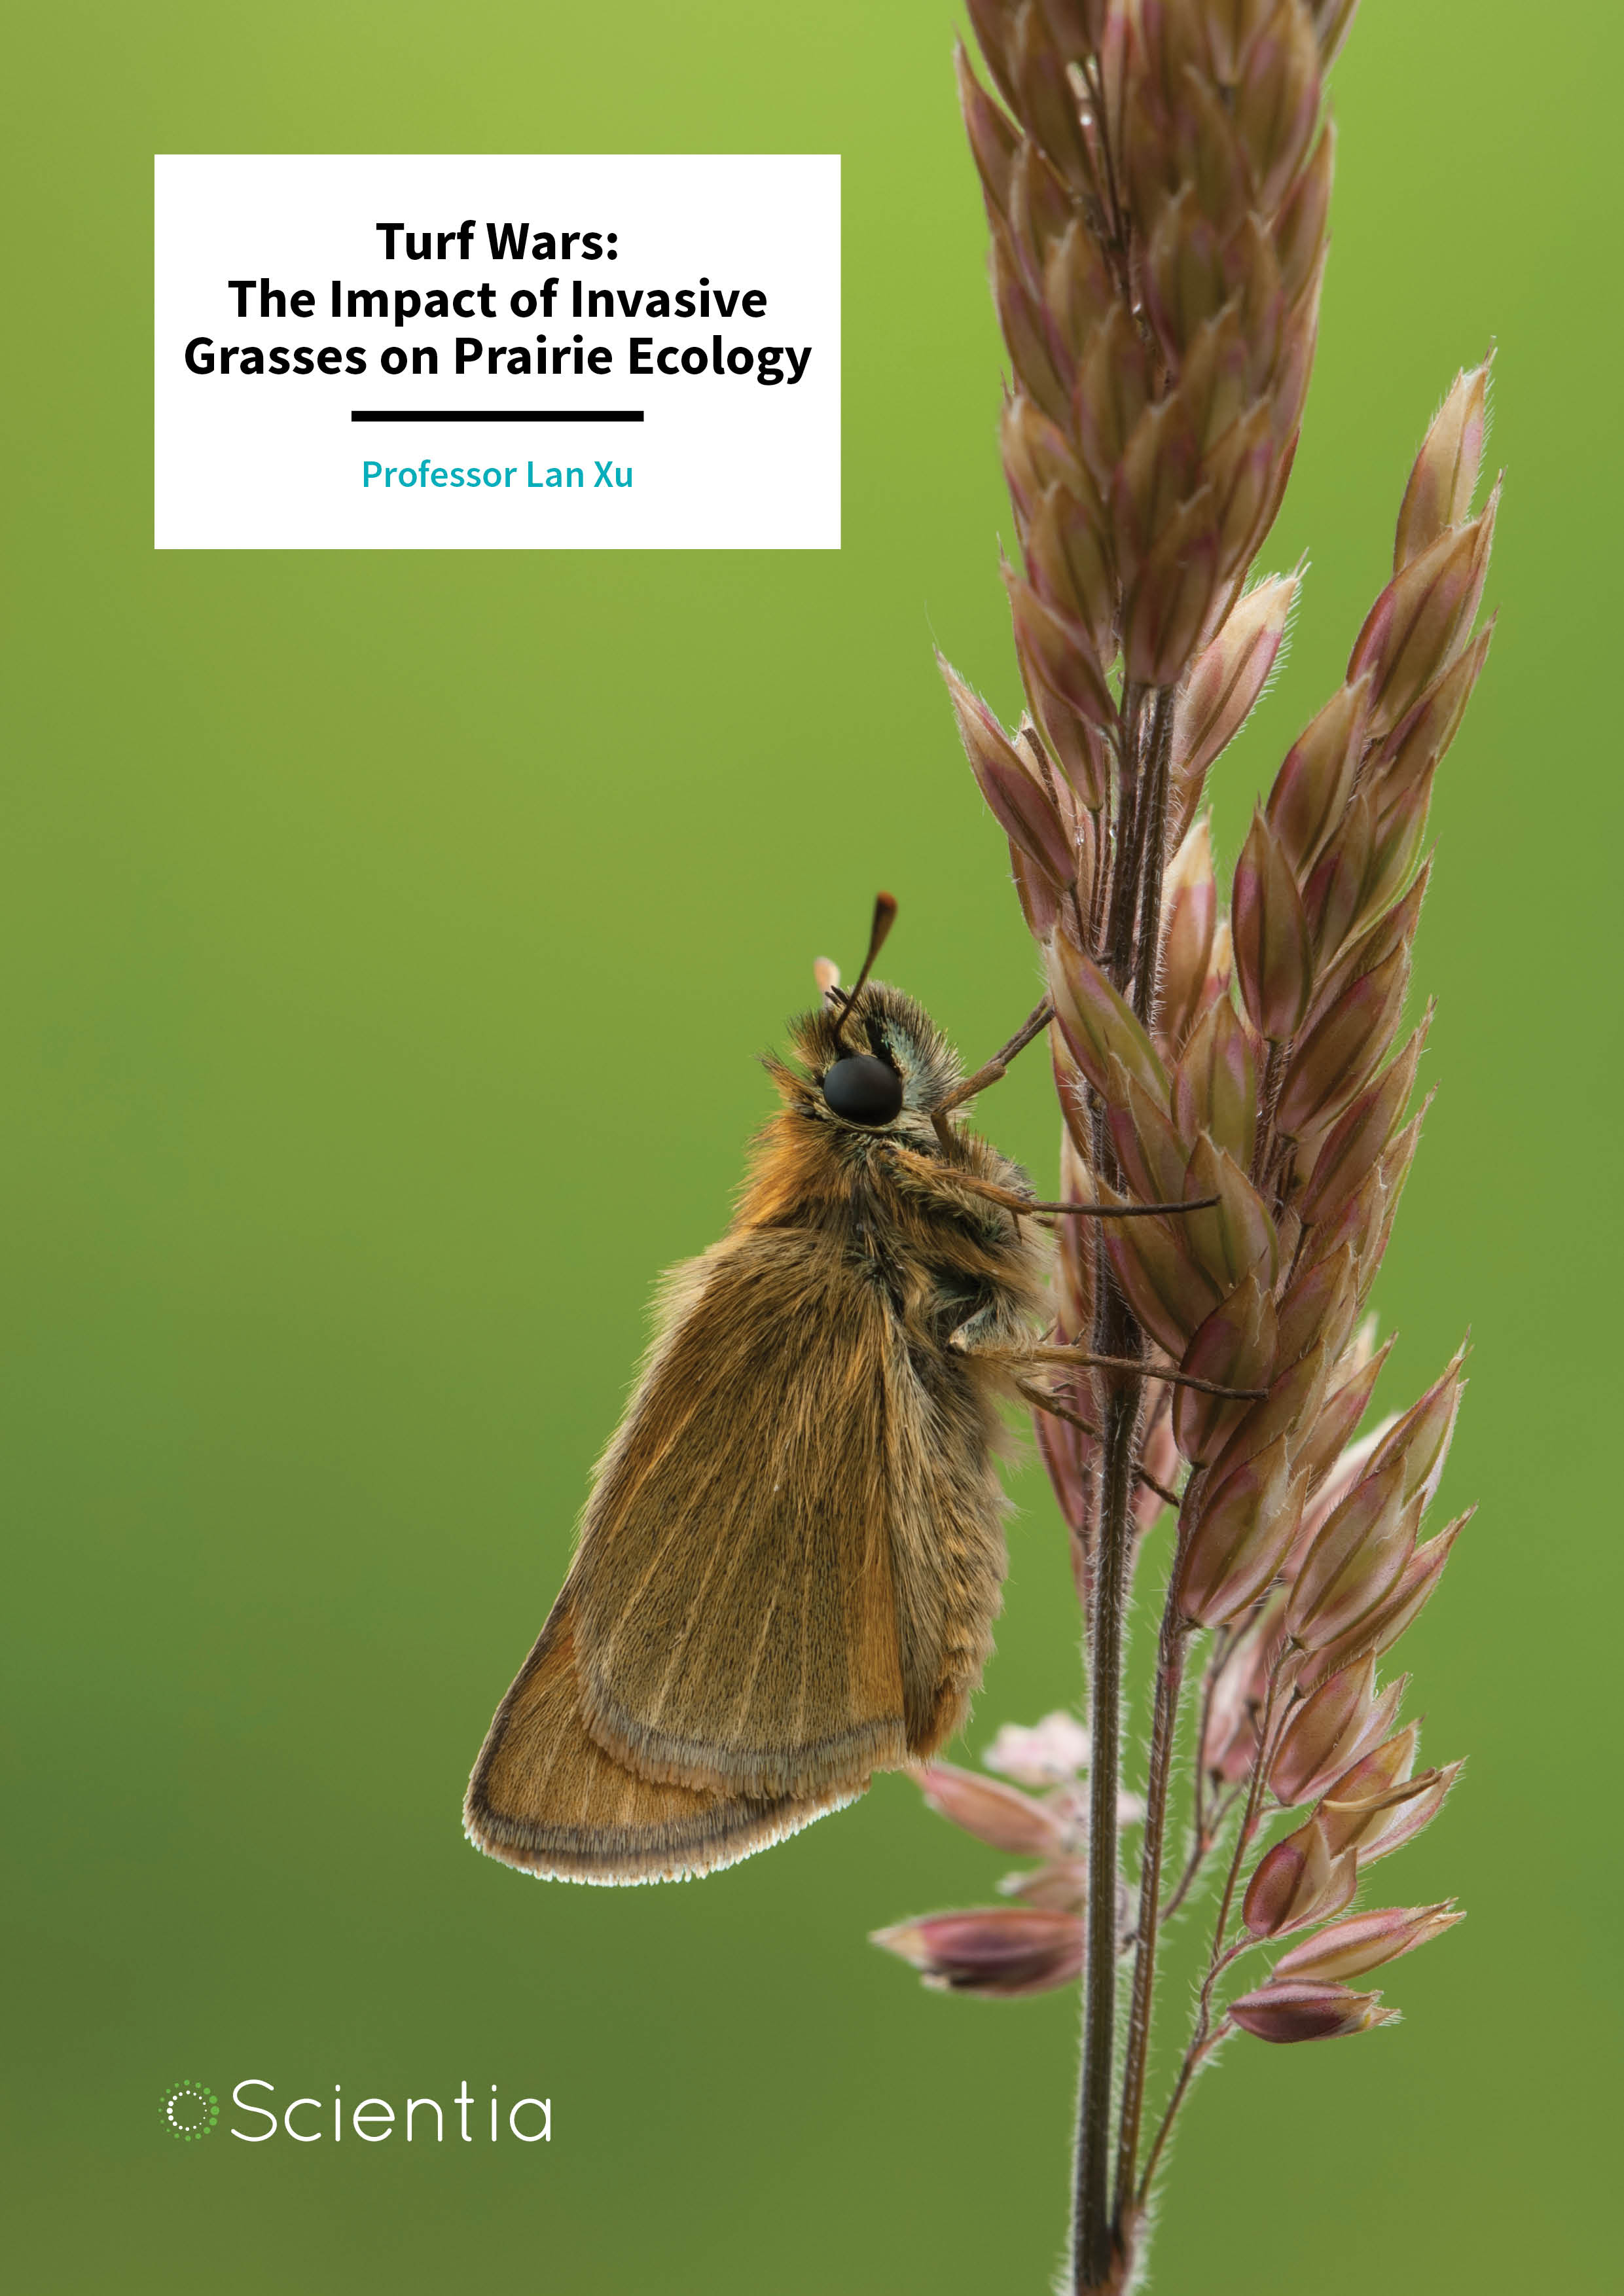 Professor Lan Xu – Turf Wars: The Impact of Invasive Grasses on Prairie Ecology